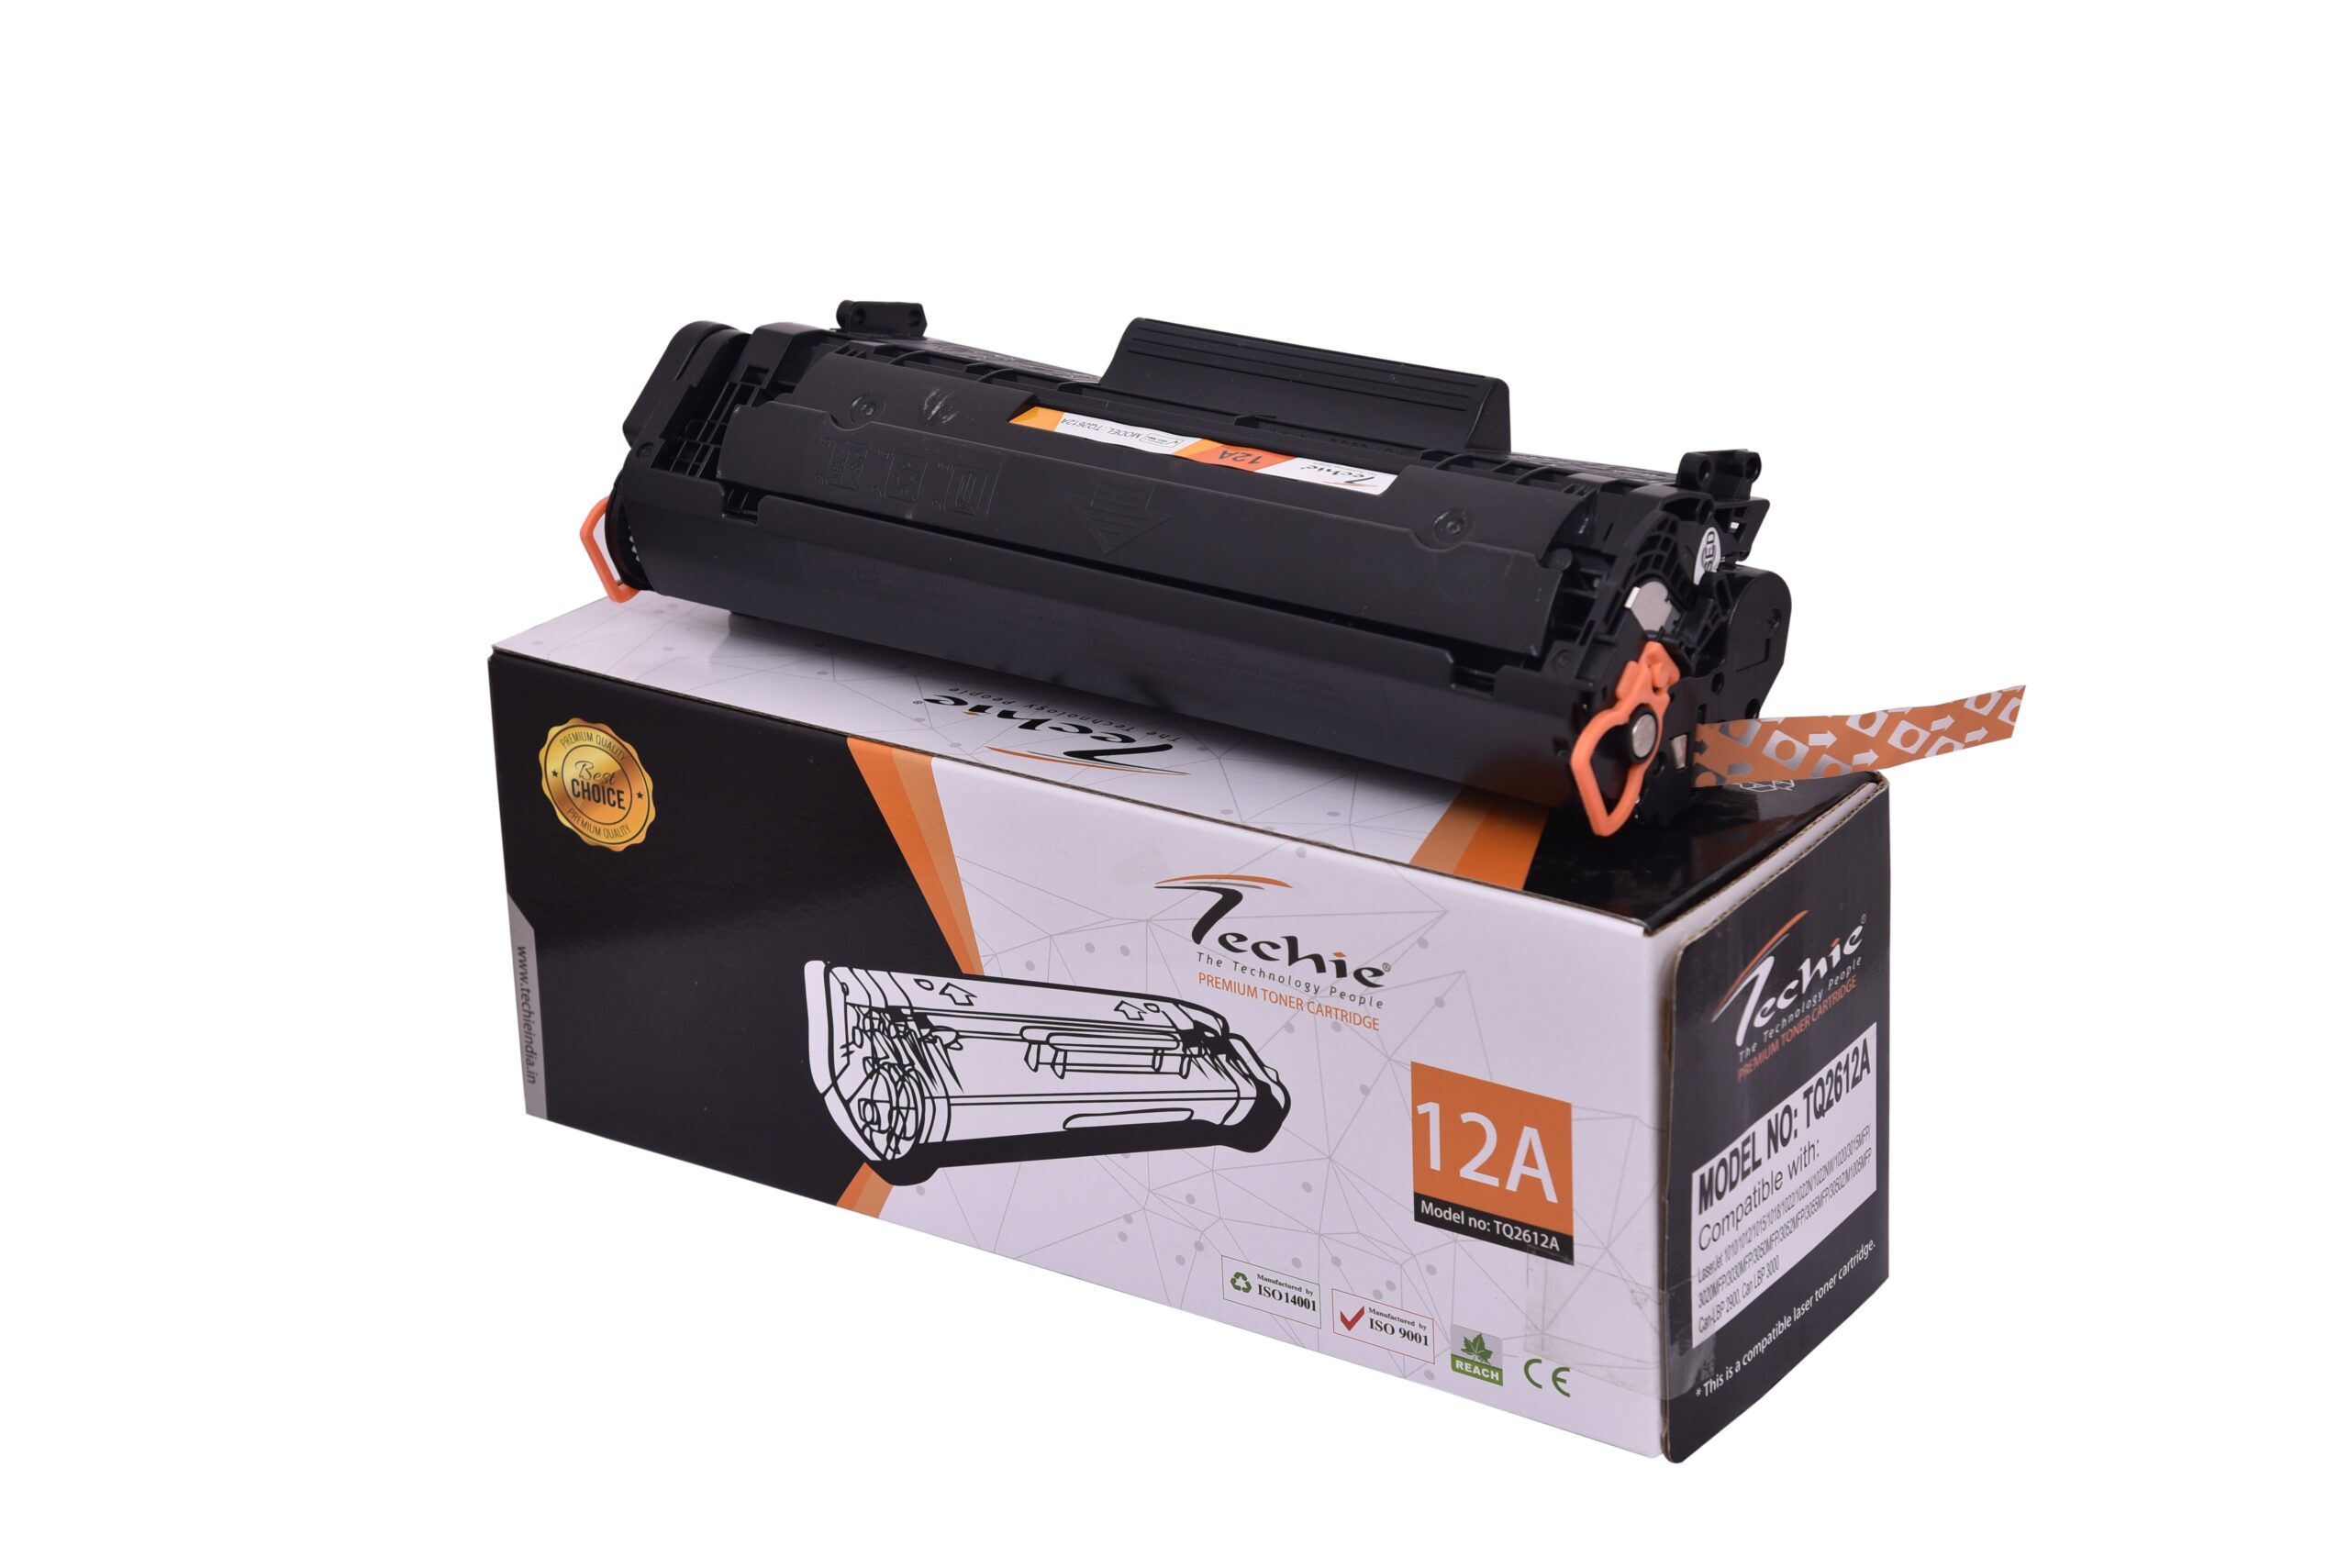 12A Toner cartridge printer